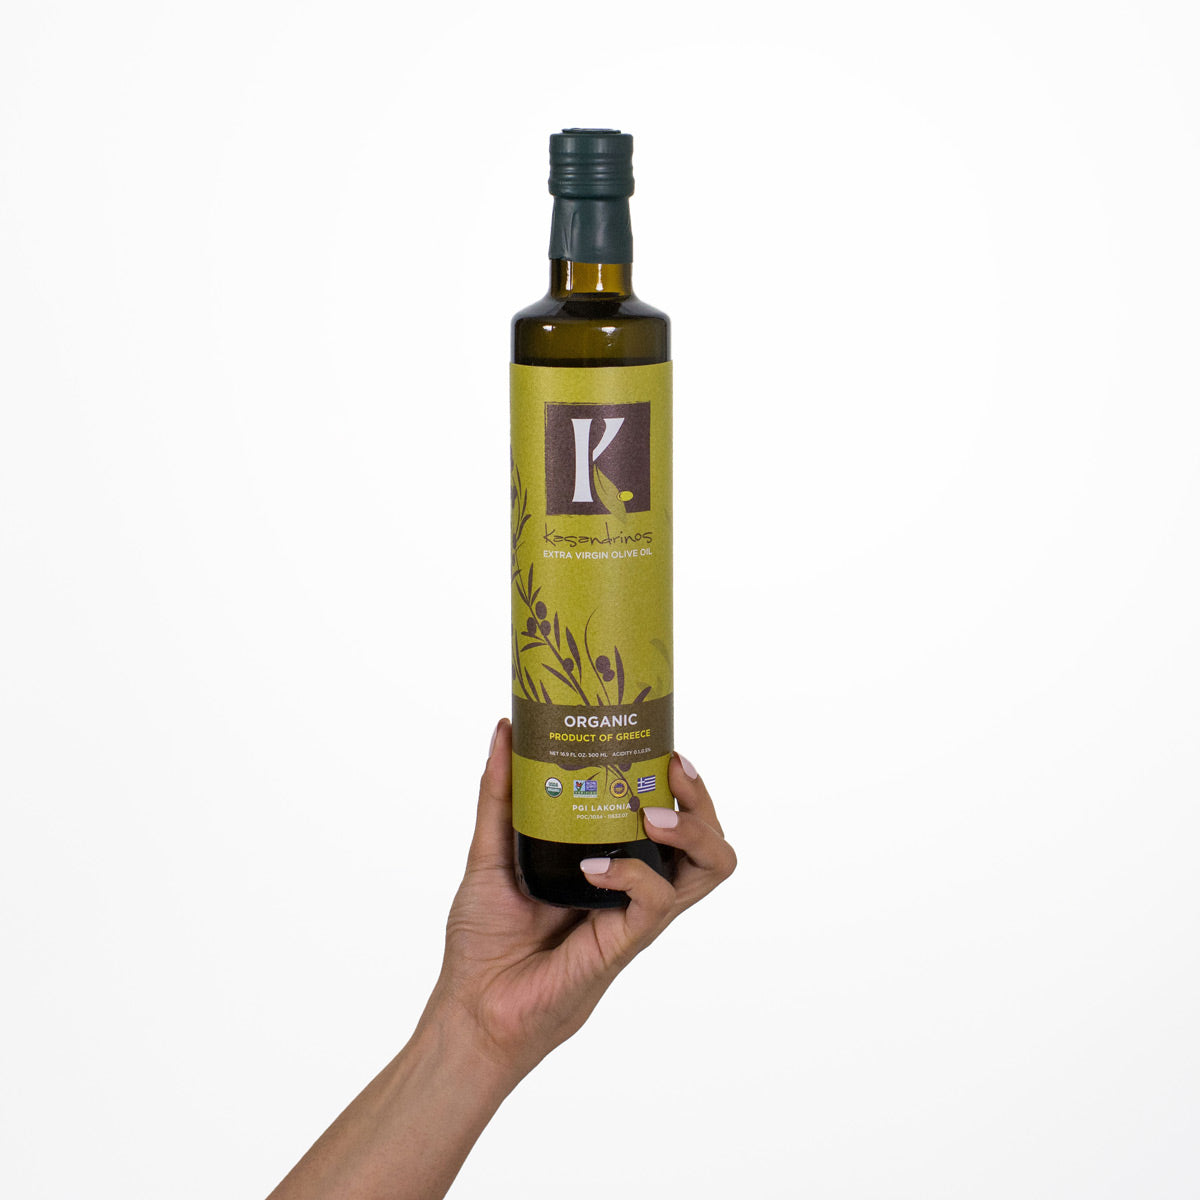 500ml KASANDRINOS Olive Oil Bottle - In hand for size reference